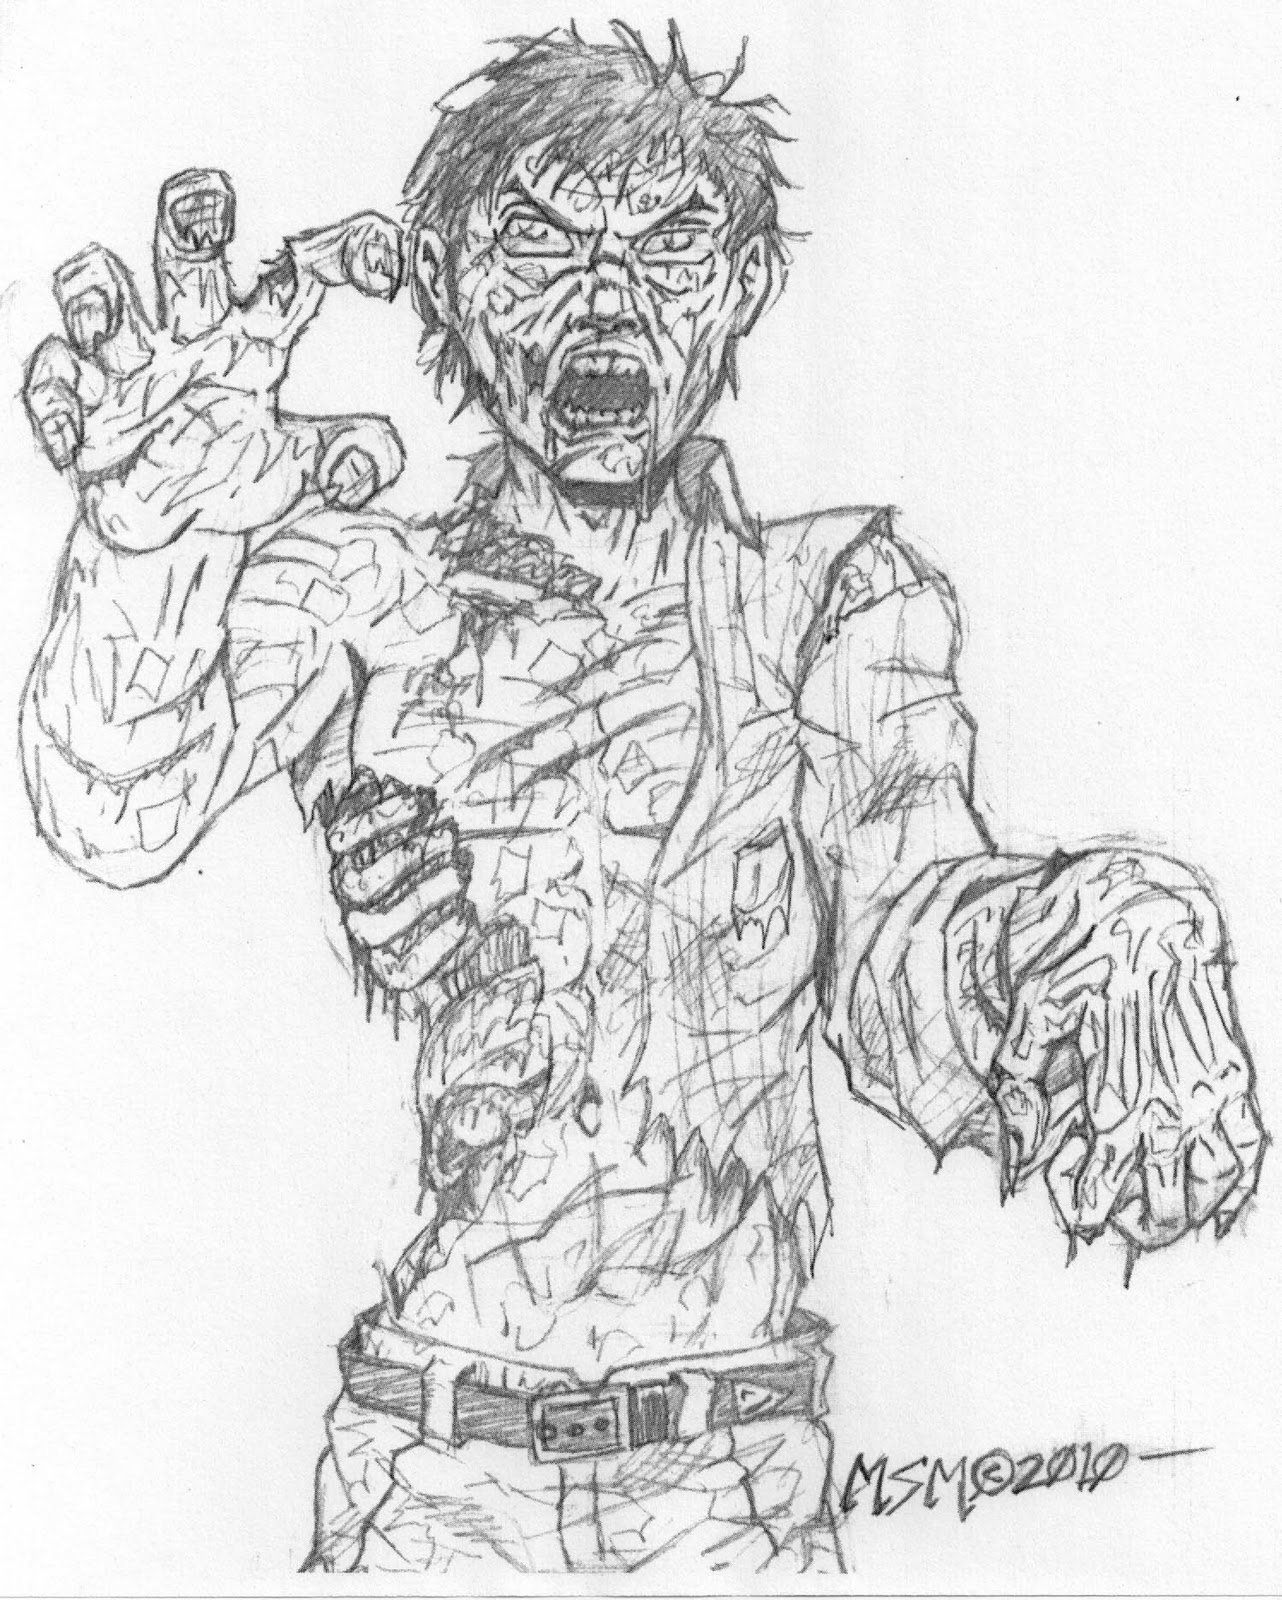 Включи зомби нарисовал. Зомби рисунок карандашом. Зомби картинки для срисовки. Зомби рисунок карандашом для срисовки. Нарисовать зомби карандашом.